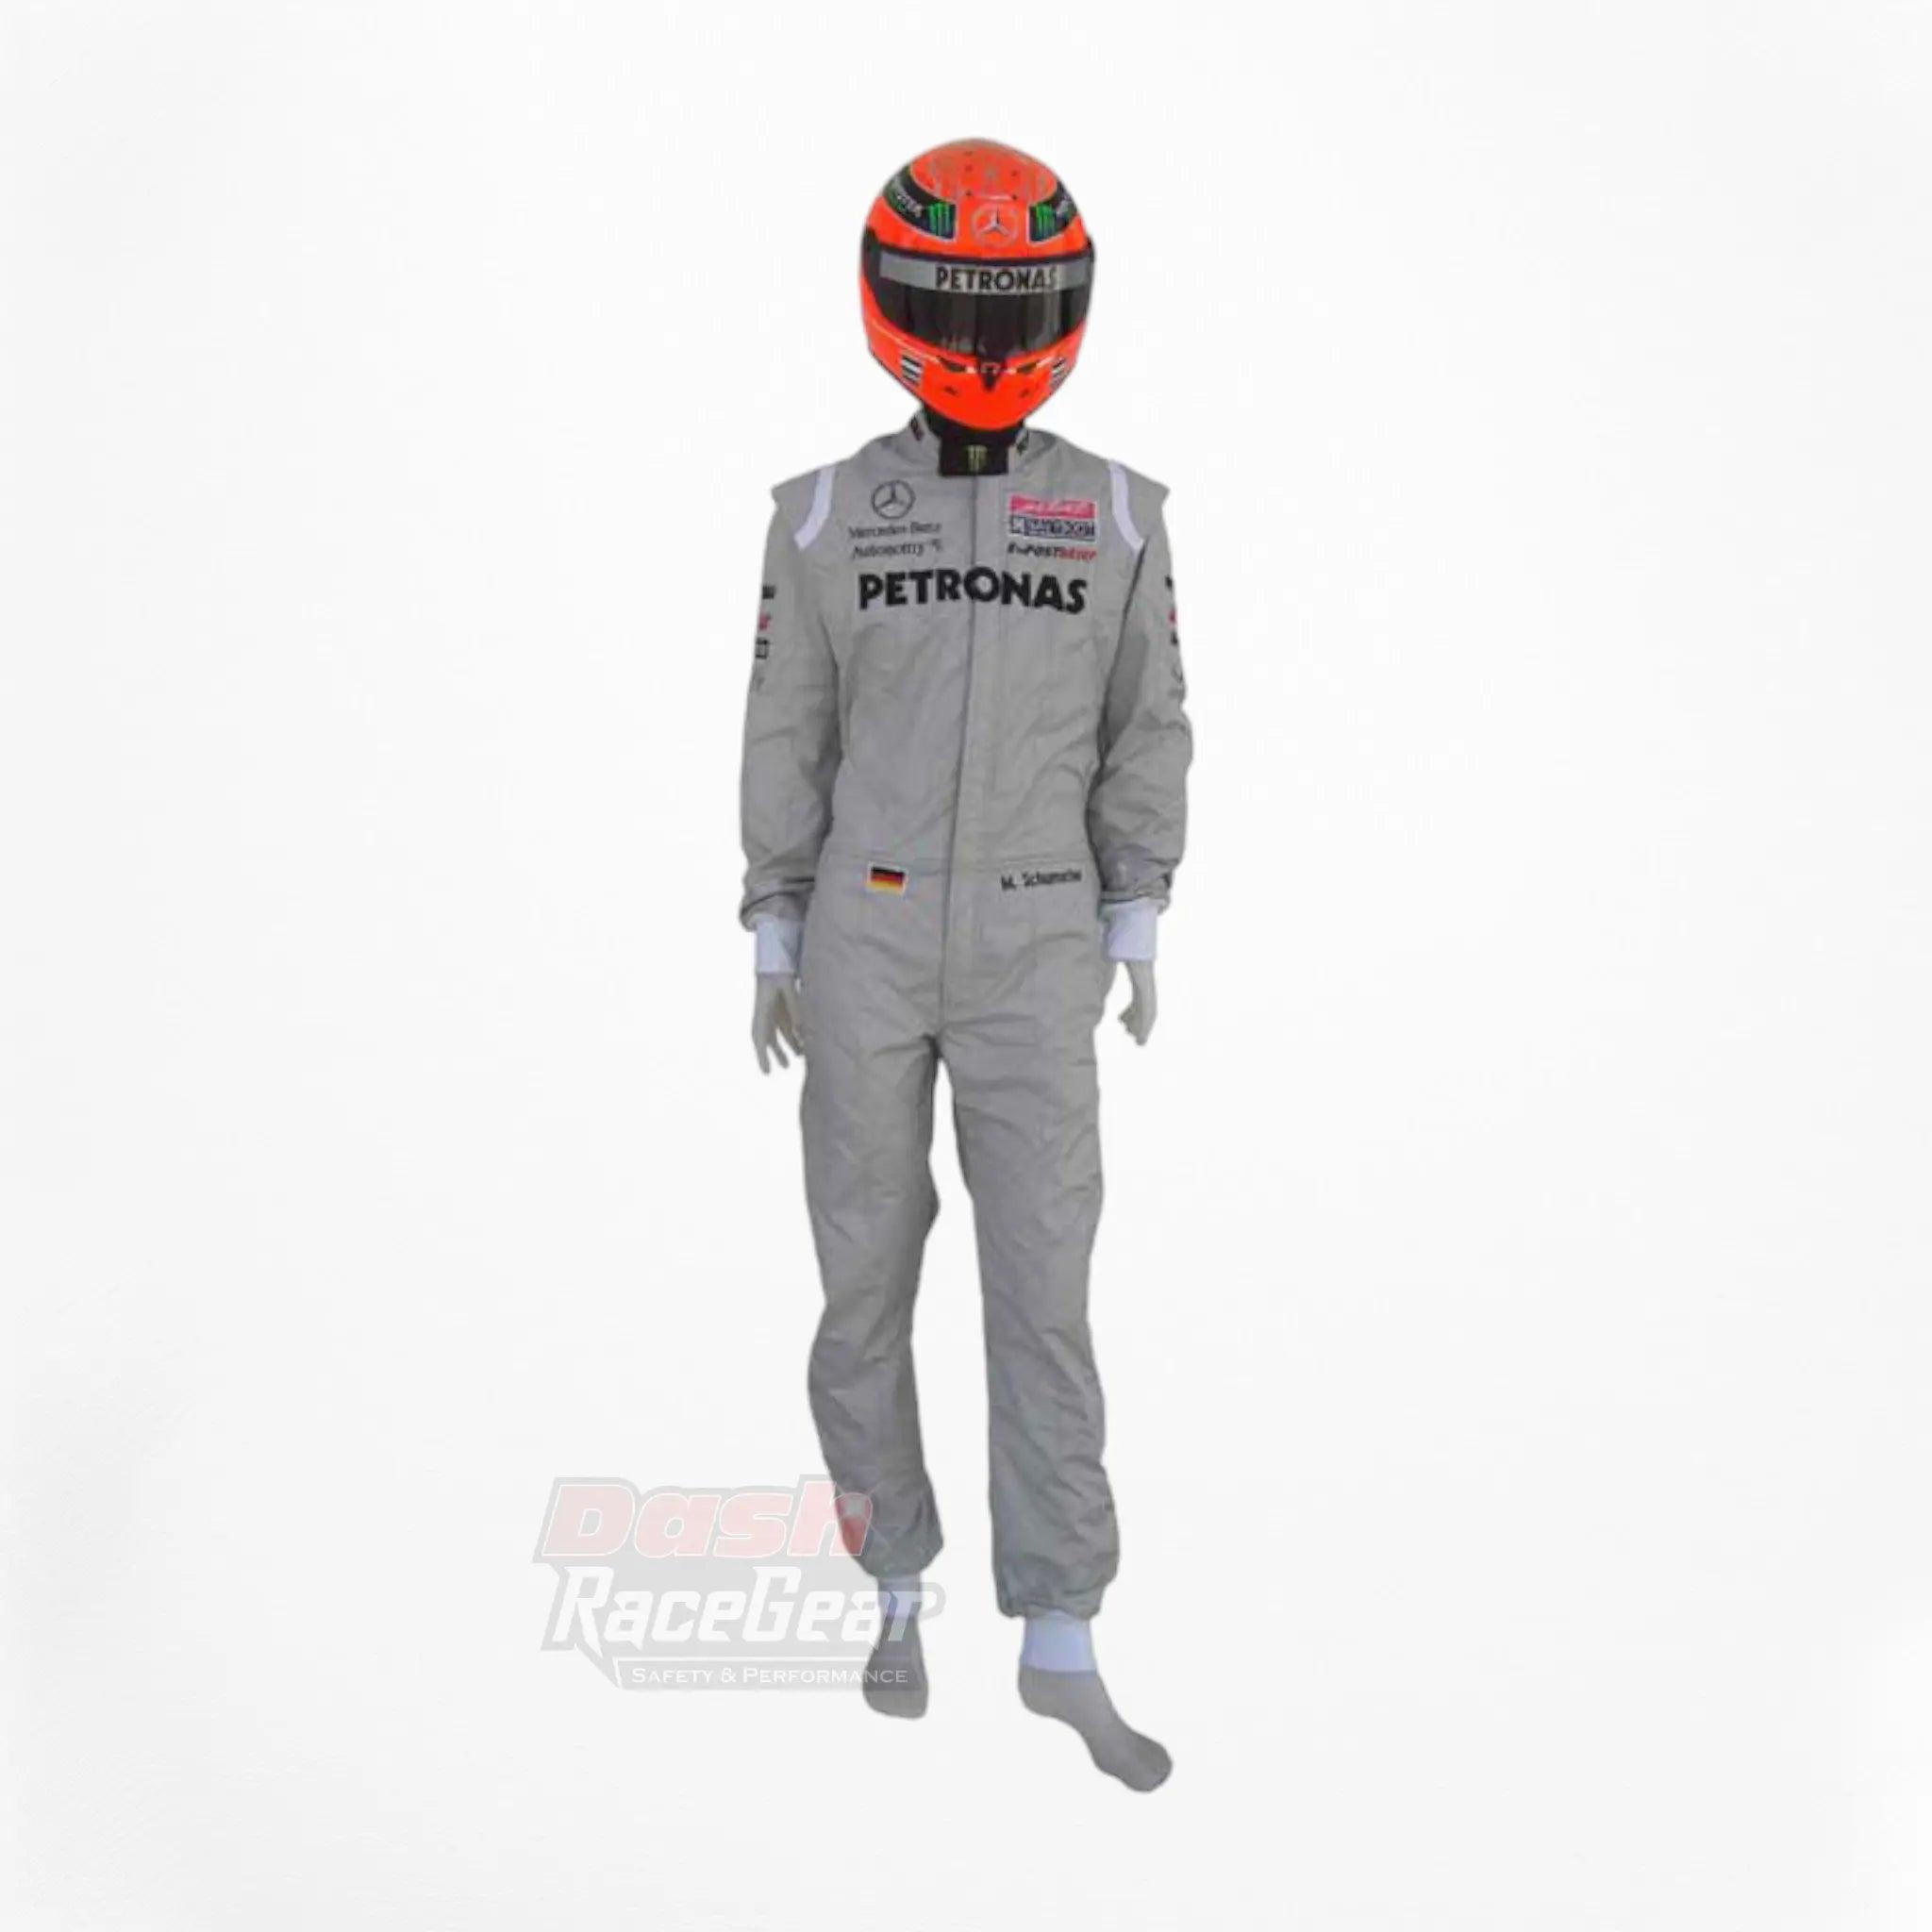 2011 Michael Schumacher Mercedes Benz F1 Embroidered Racing Suit - Dash Racegear 